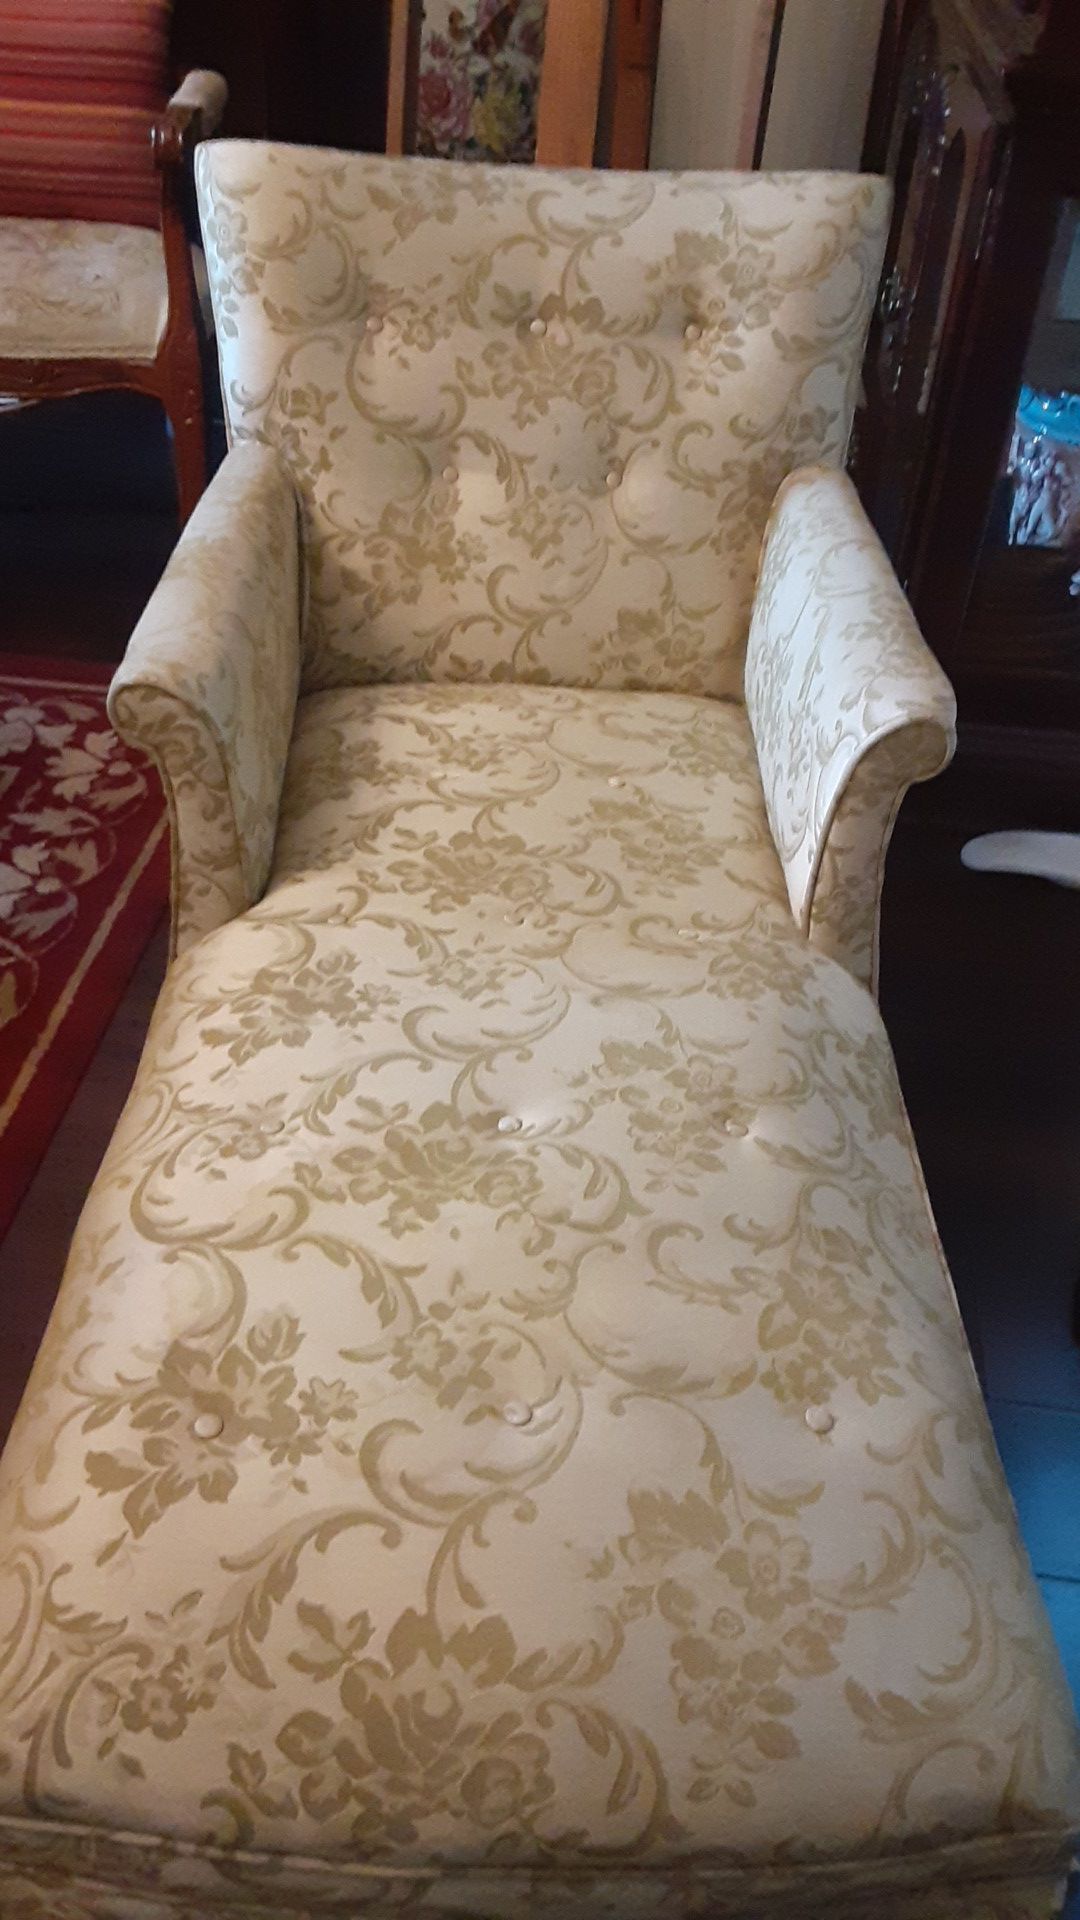 Antique Lounge chair